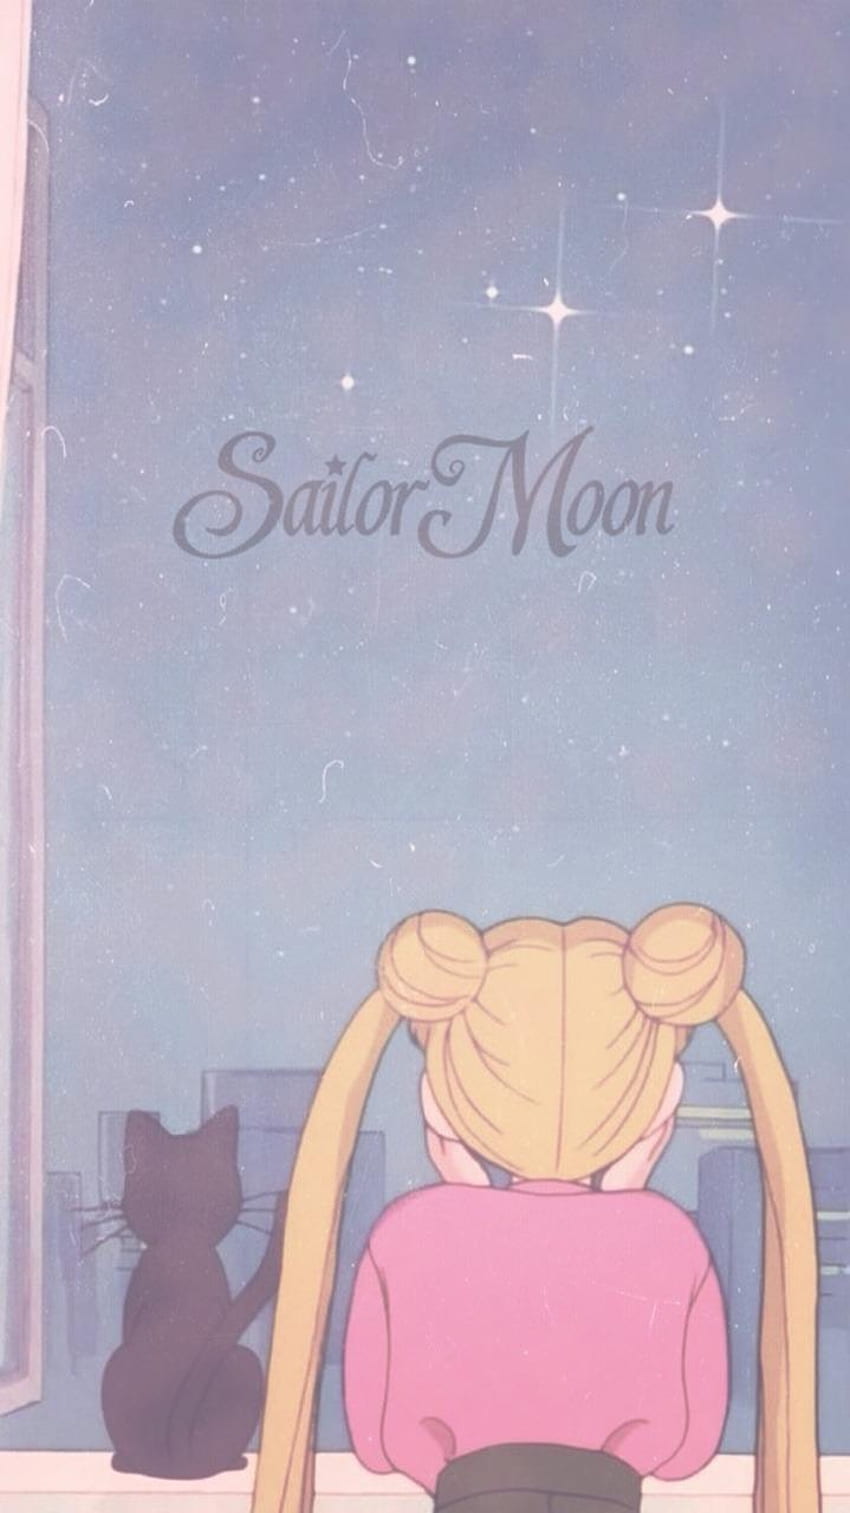 Sailor Moon  Sailor moon wallpaper Sailor moon aesthetic Sailor moon